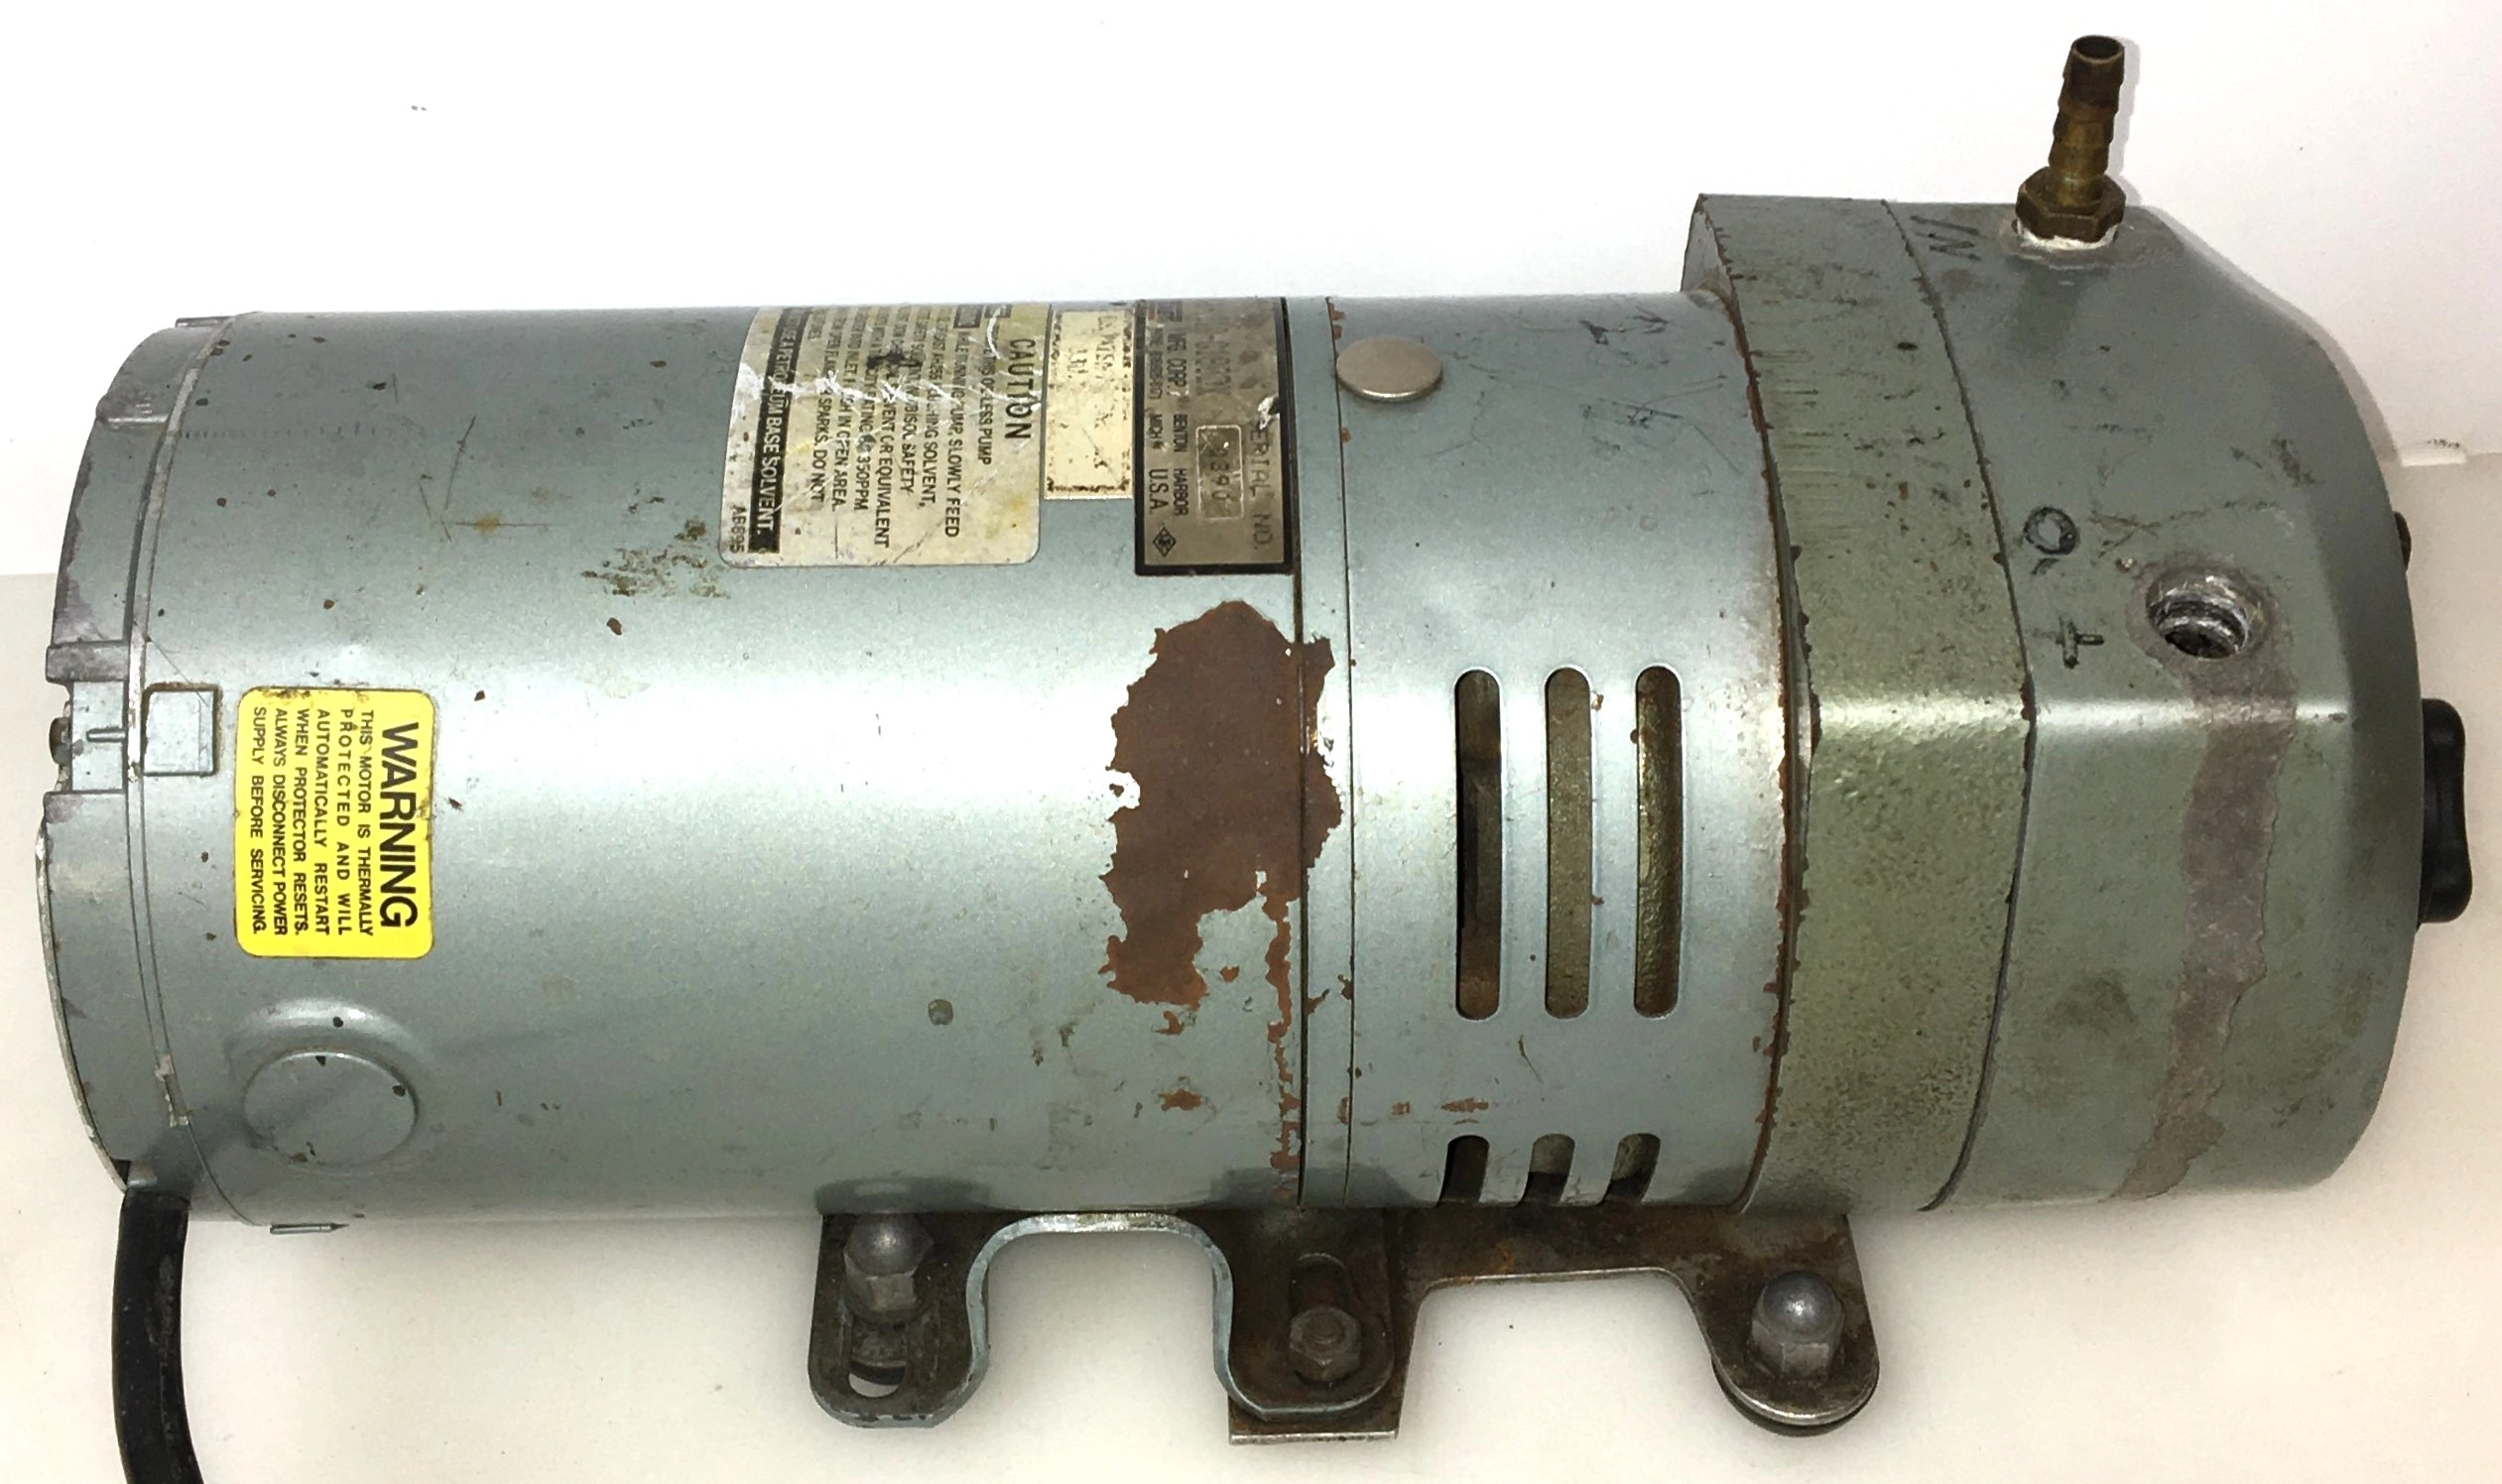 Gast 0523-101Q-G180DX Oil-Free Rotary Vacuum Pump - 4.5cfm